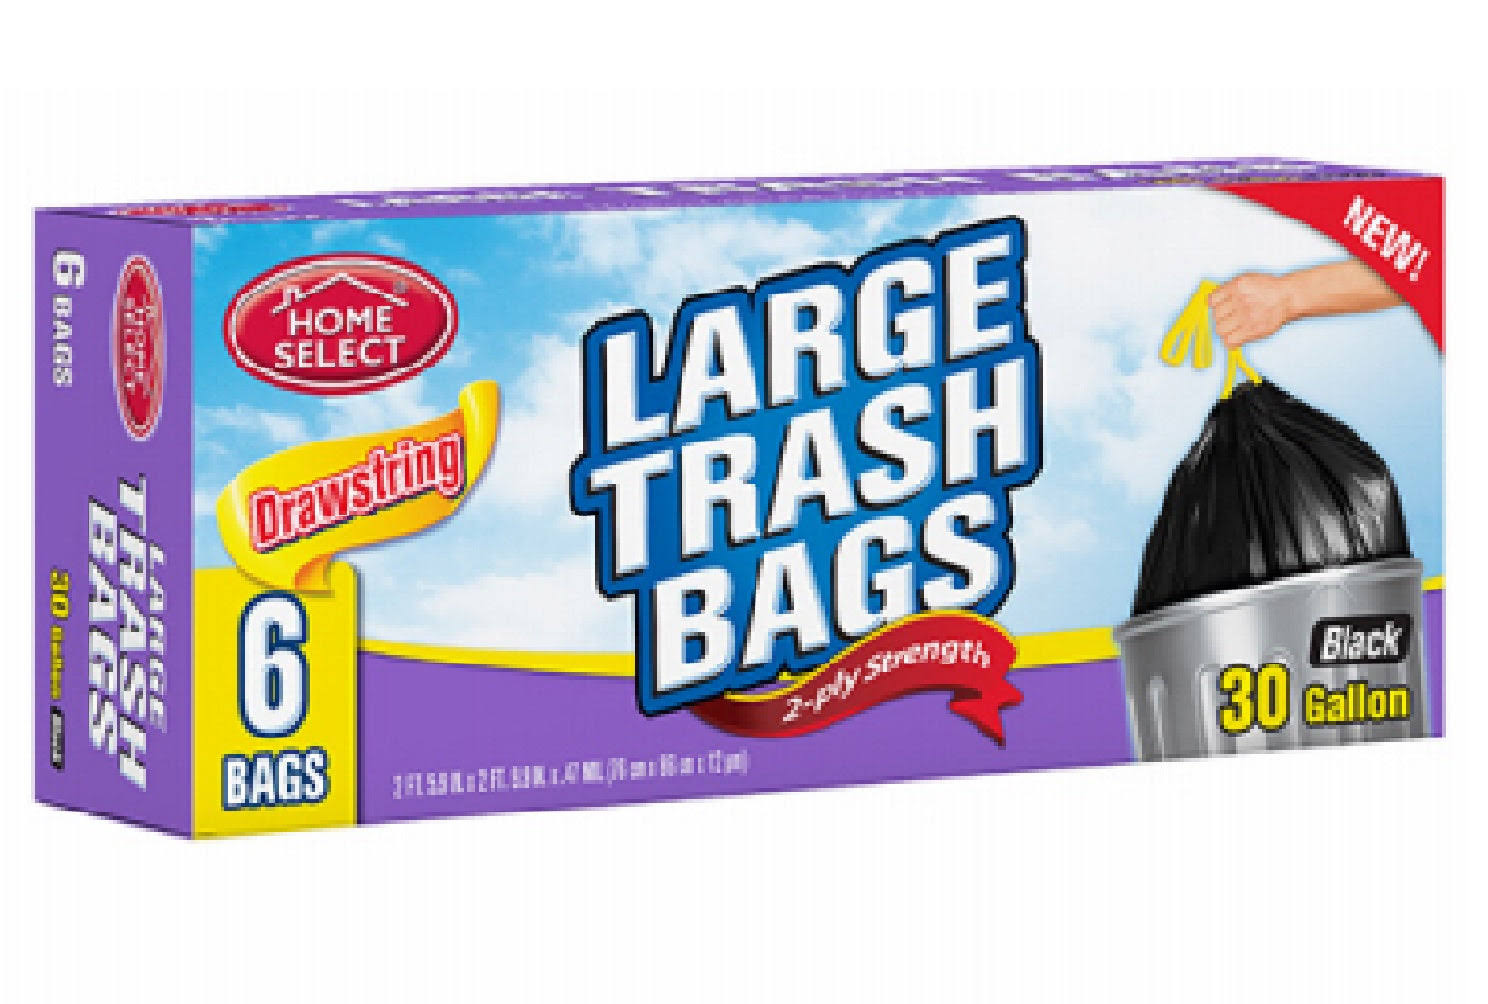 Home Select Drawstring Trash Bags - X-Large, 6 Bags